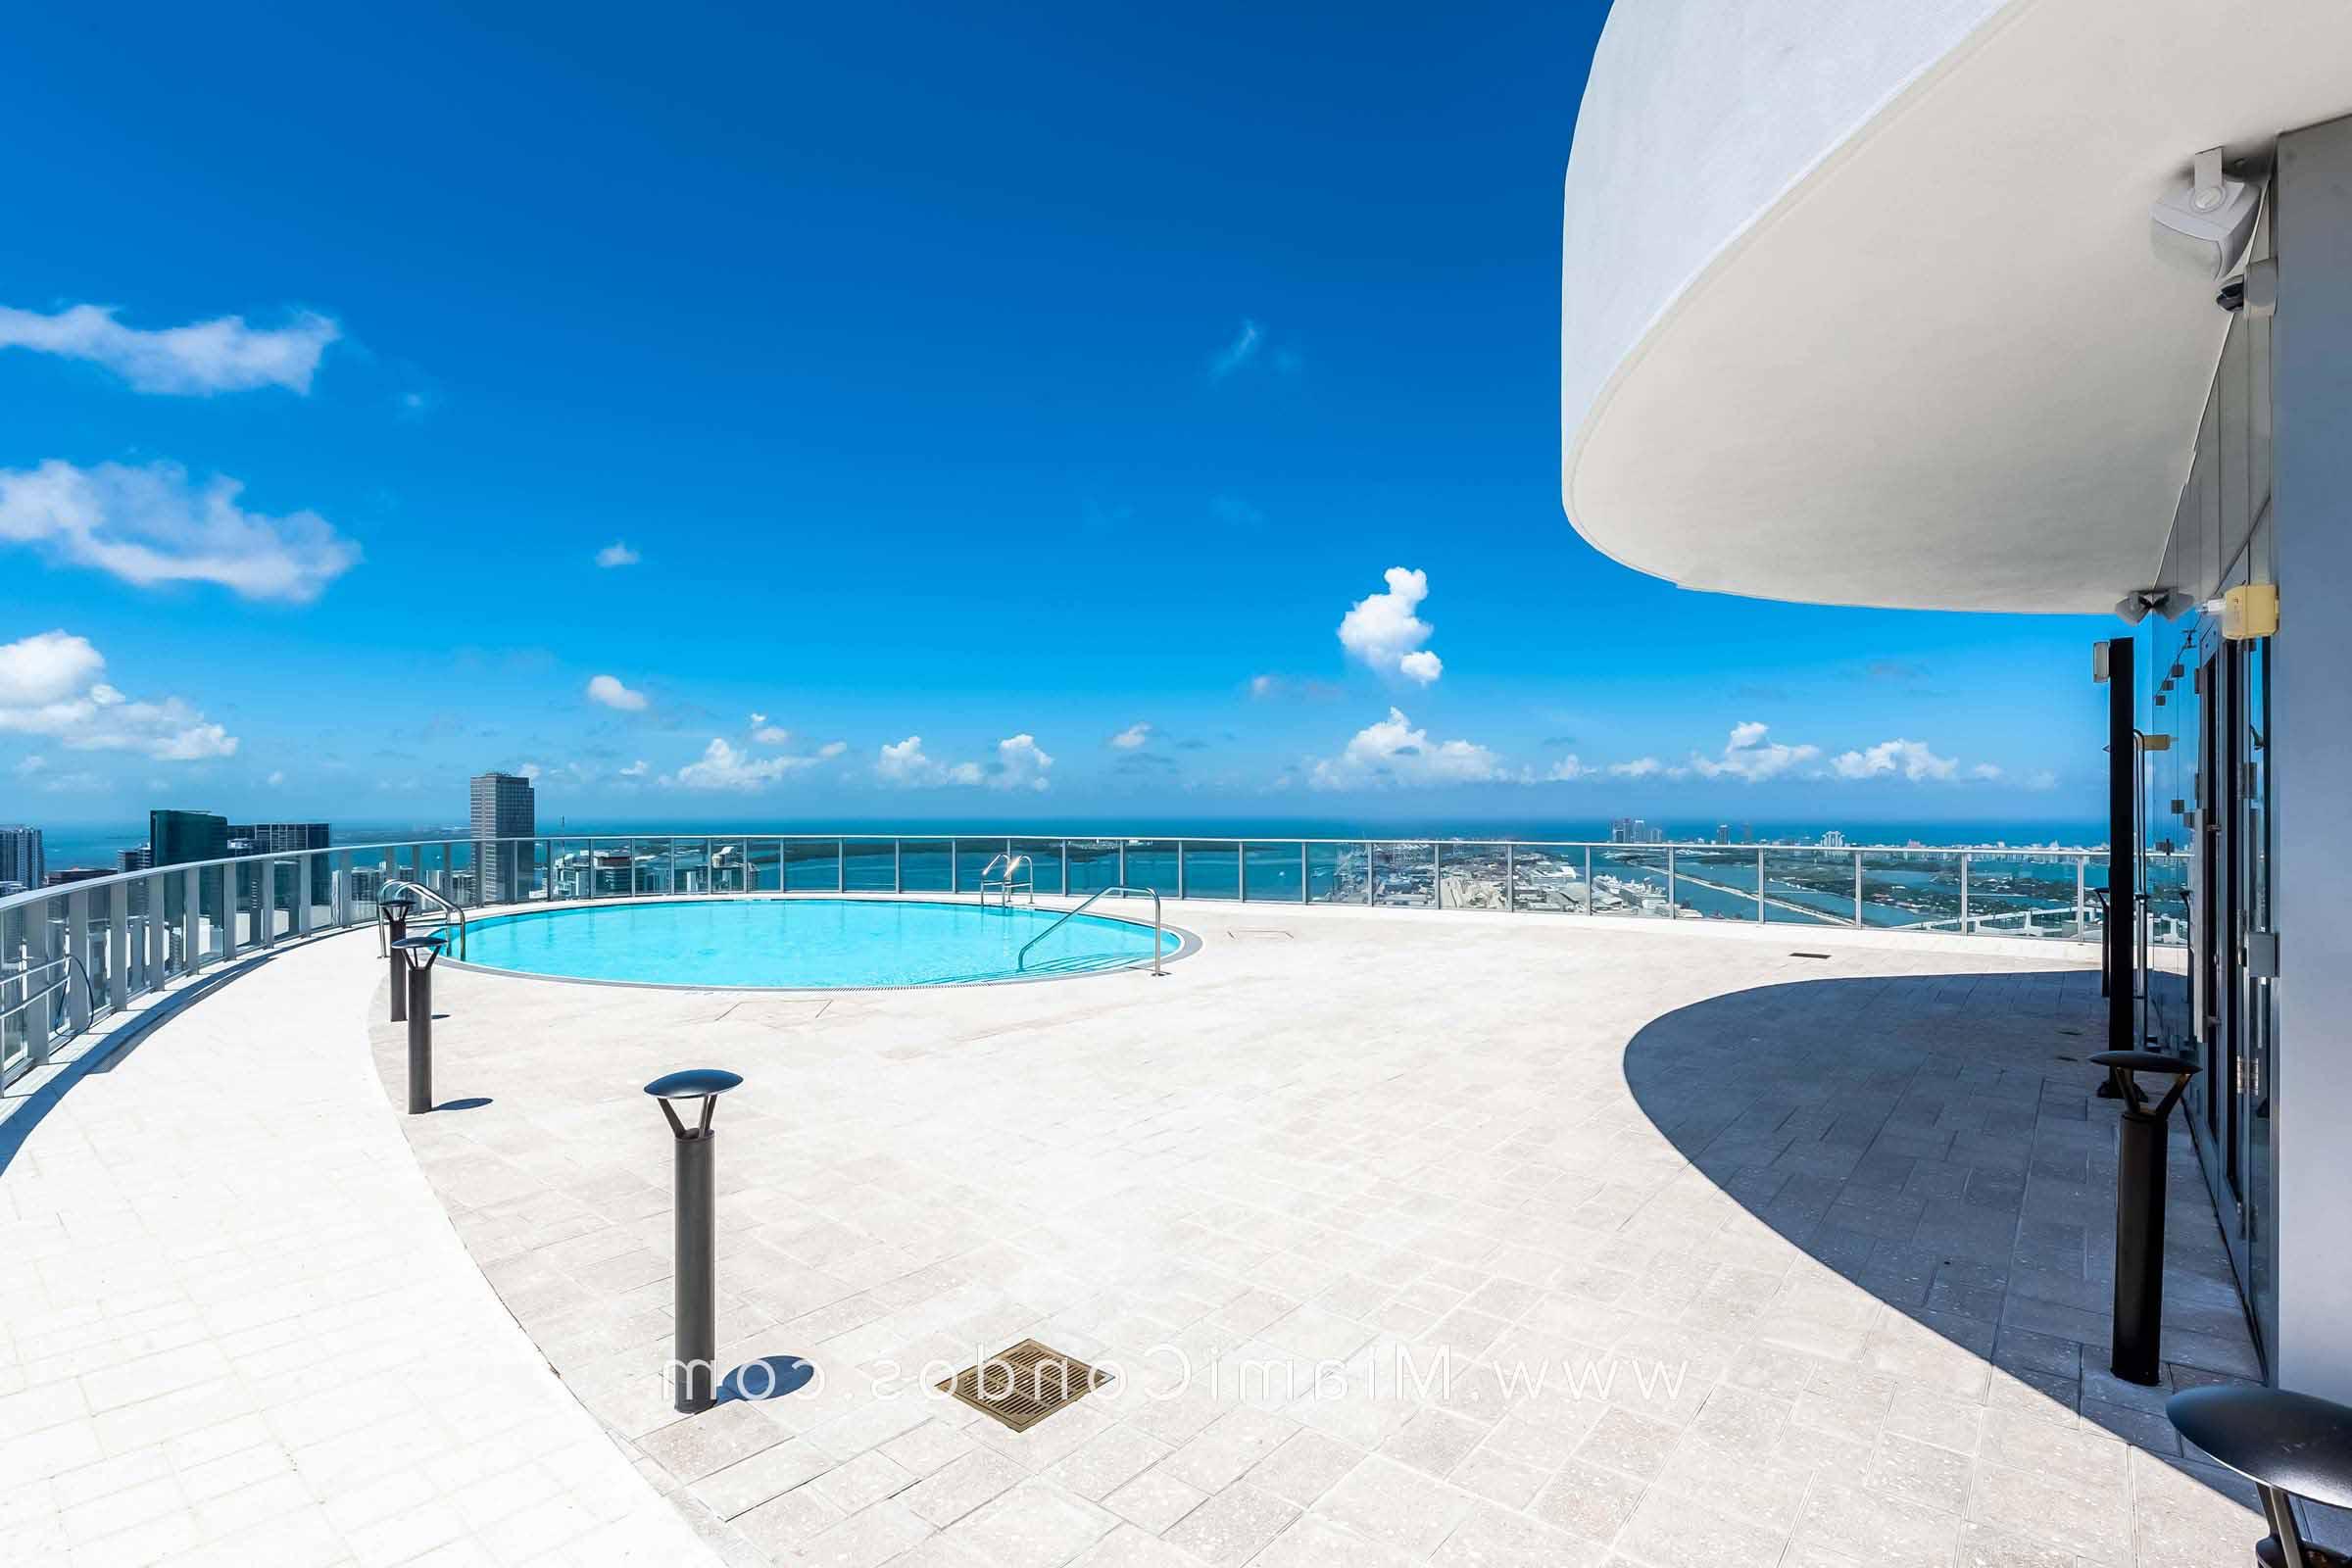 Paramount Miami Rooftop Pool Deck